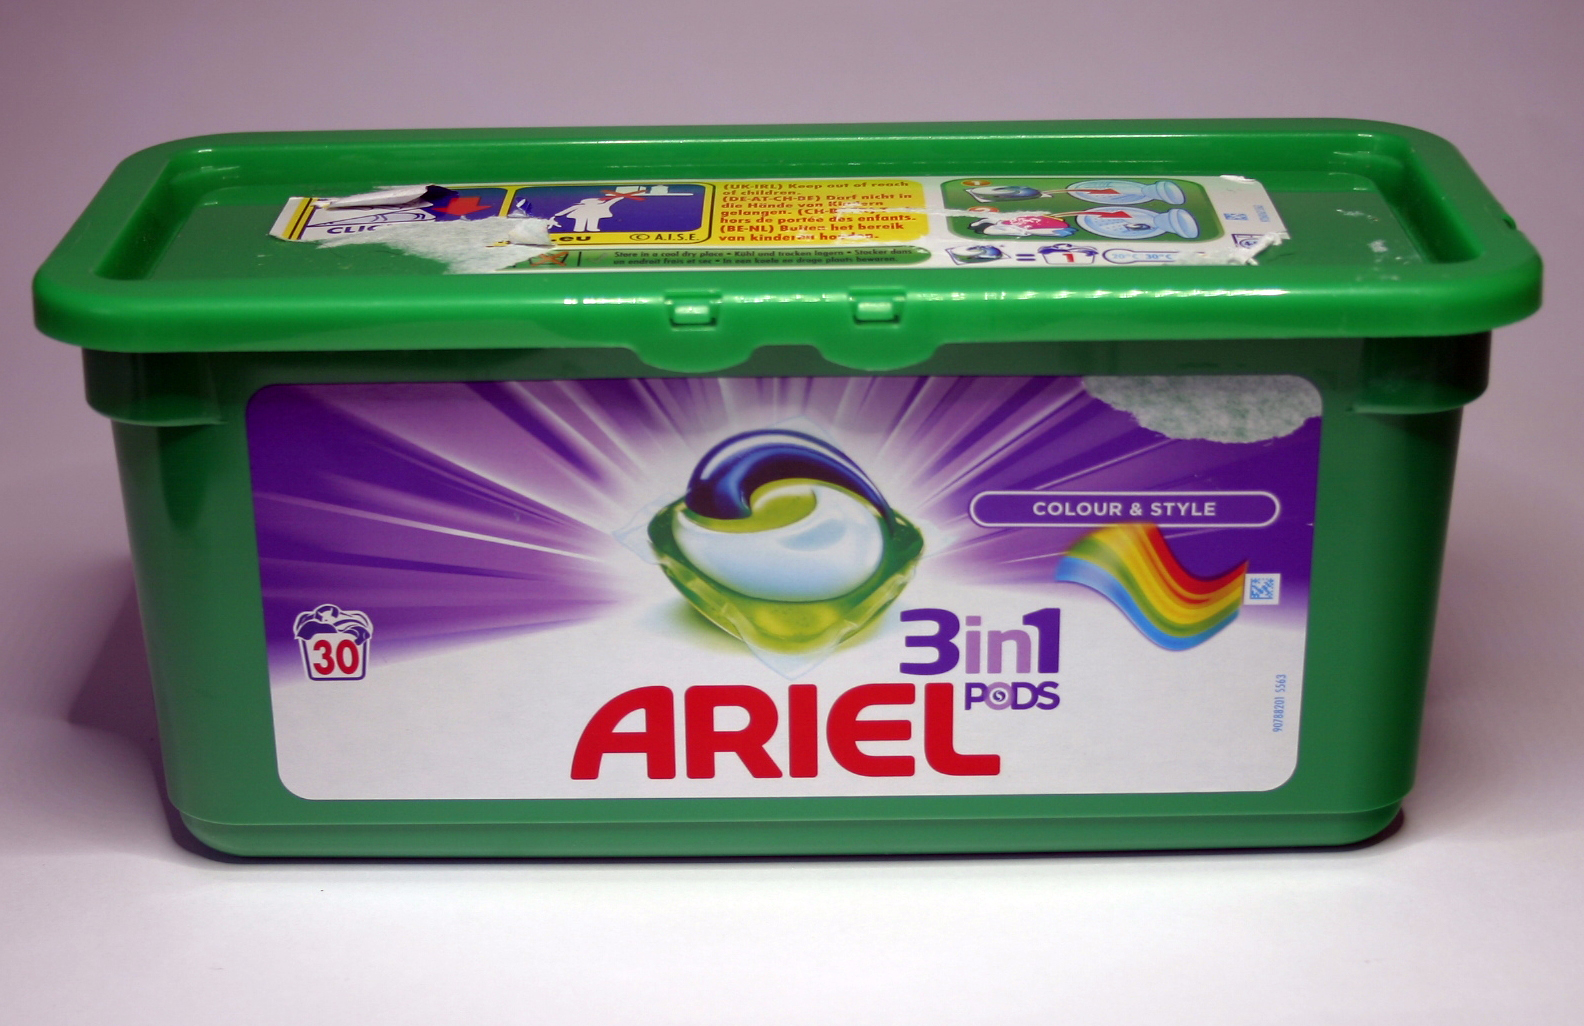 Ariel 3in1 Pod Box.jpg